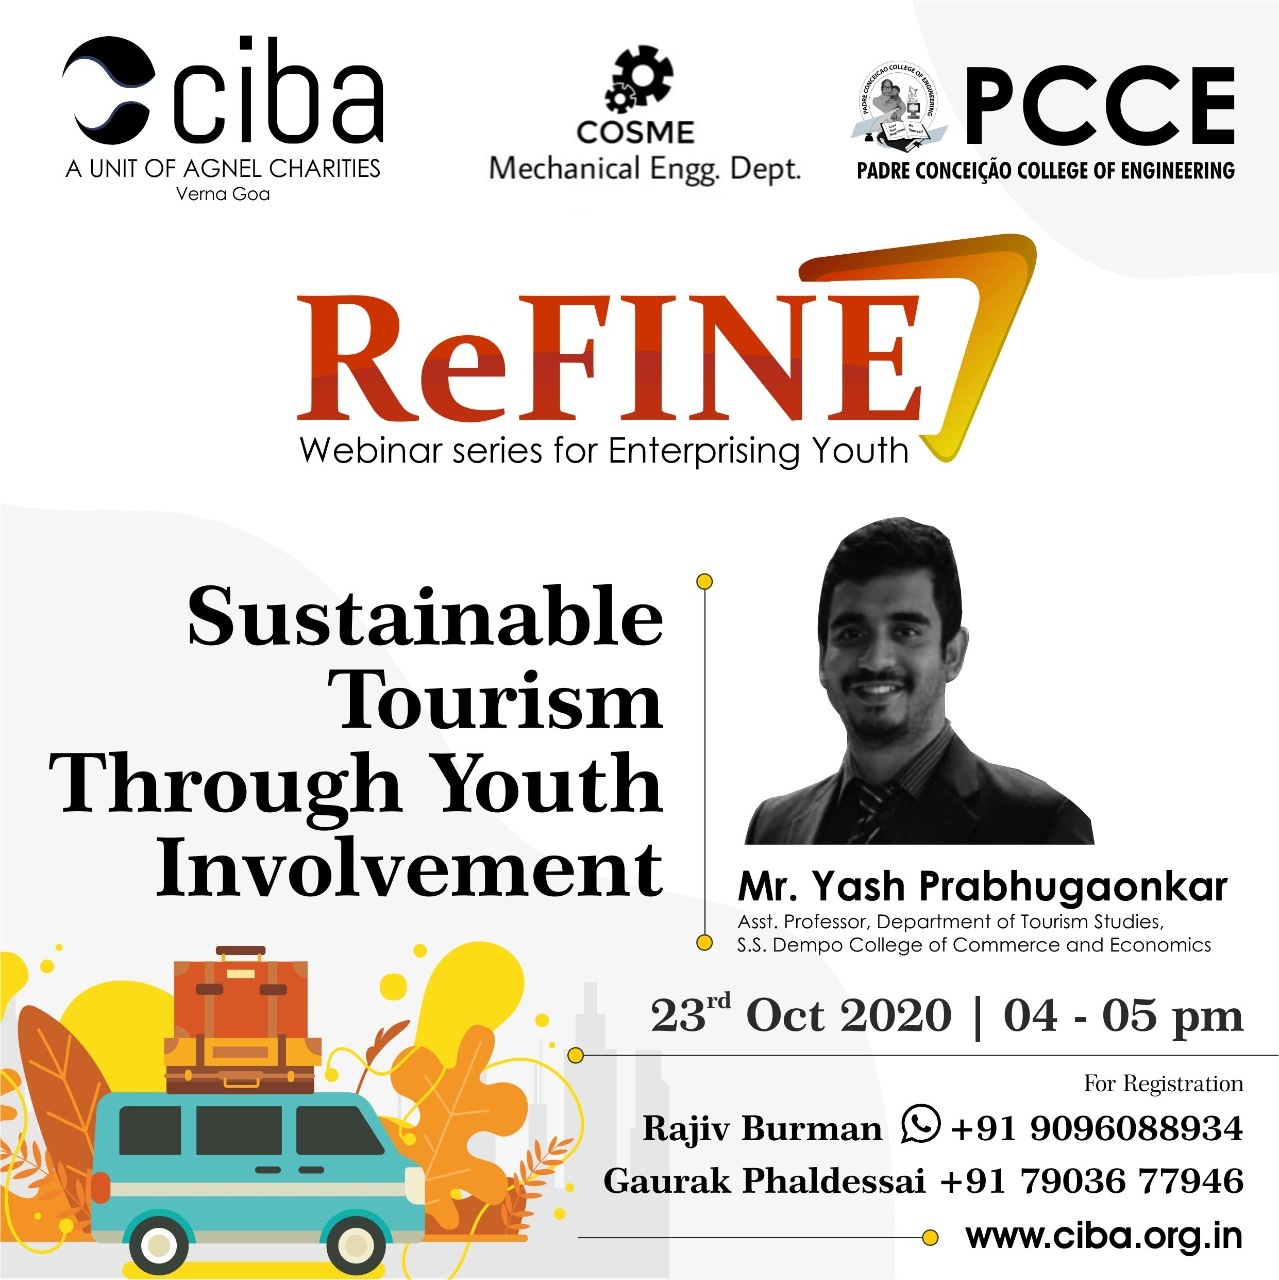 ciba-ReFINE - Sustainable Tourism Through Youth Involvement